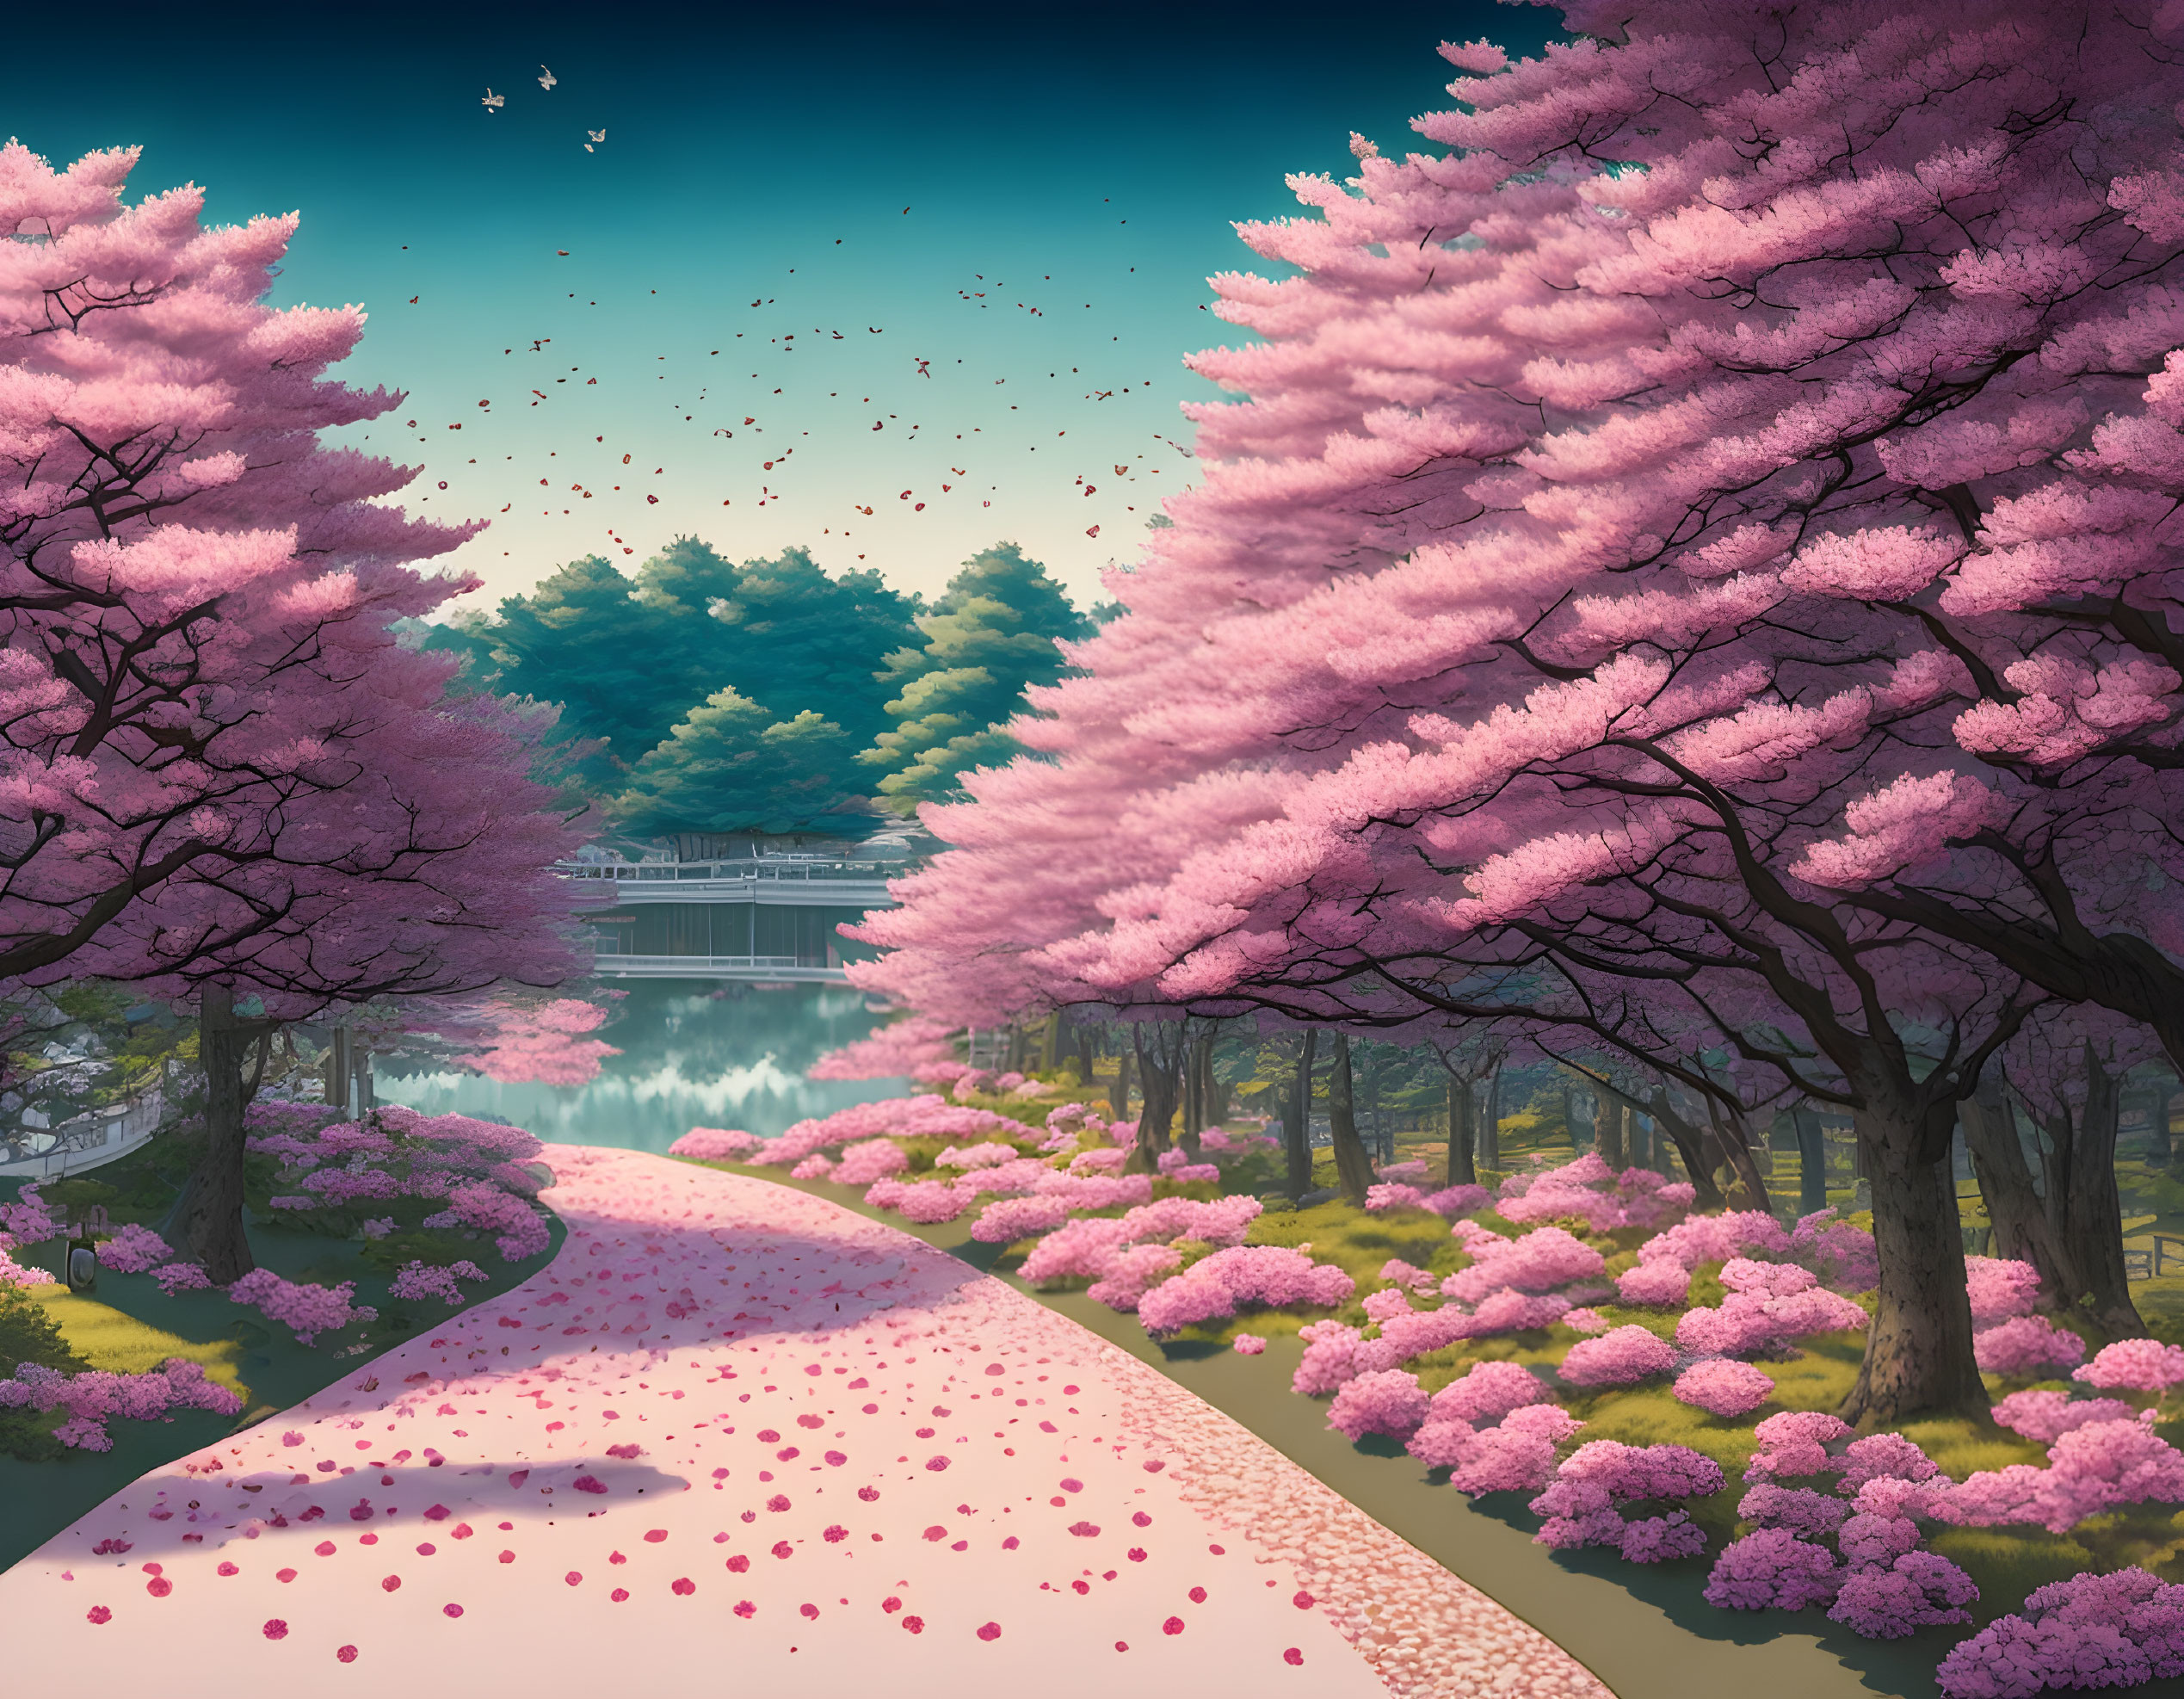 cherry tree blossoms